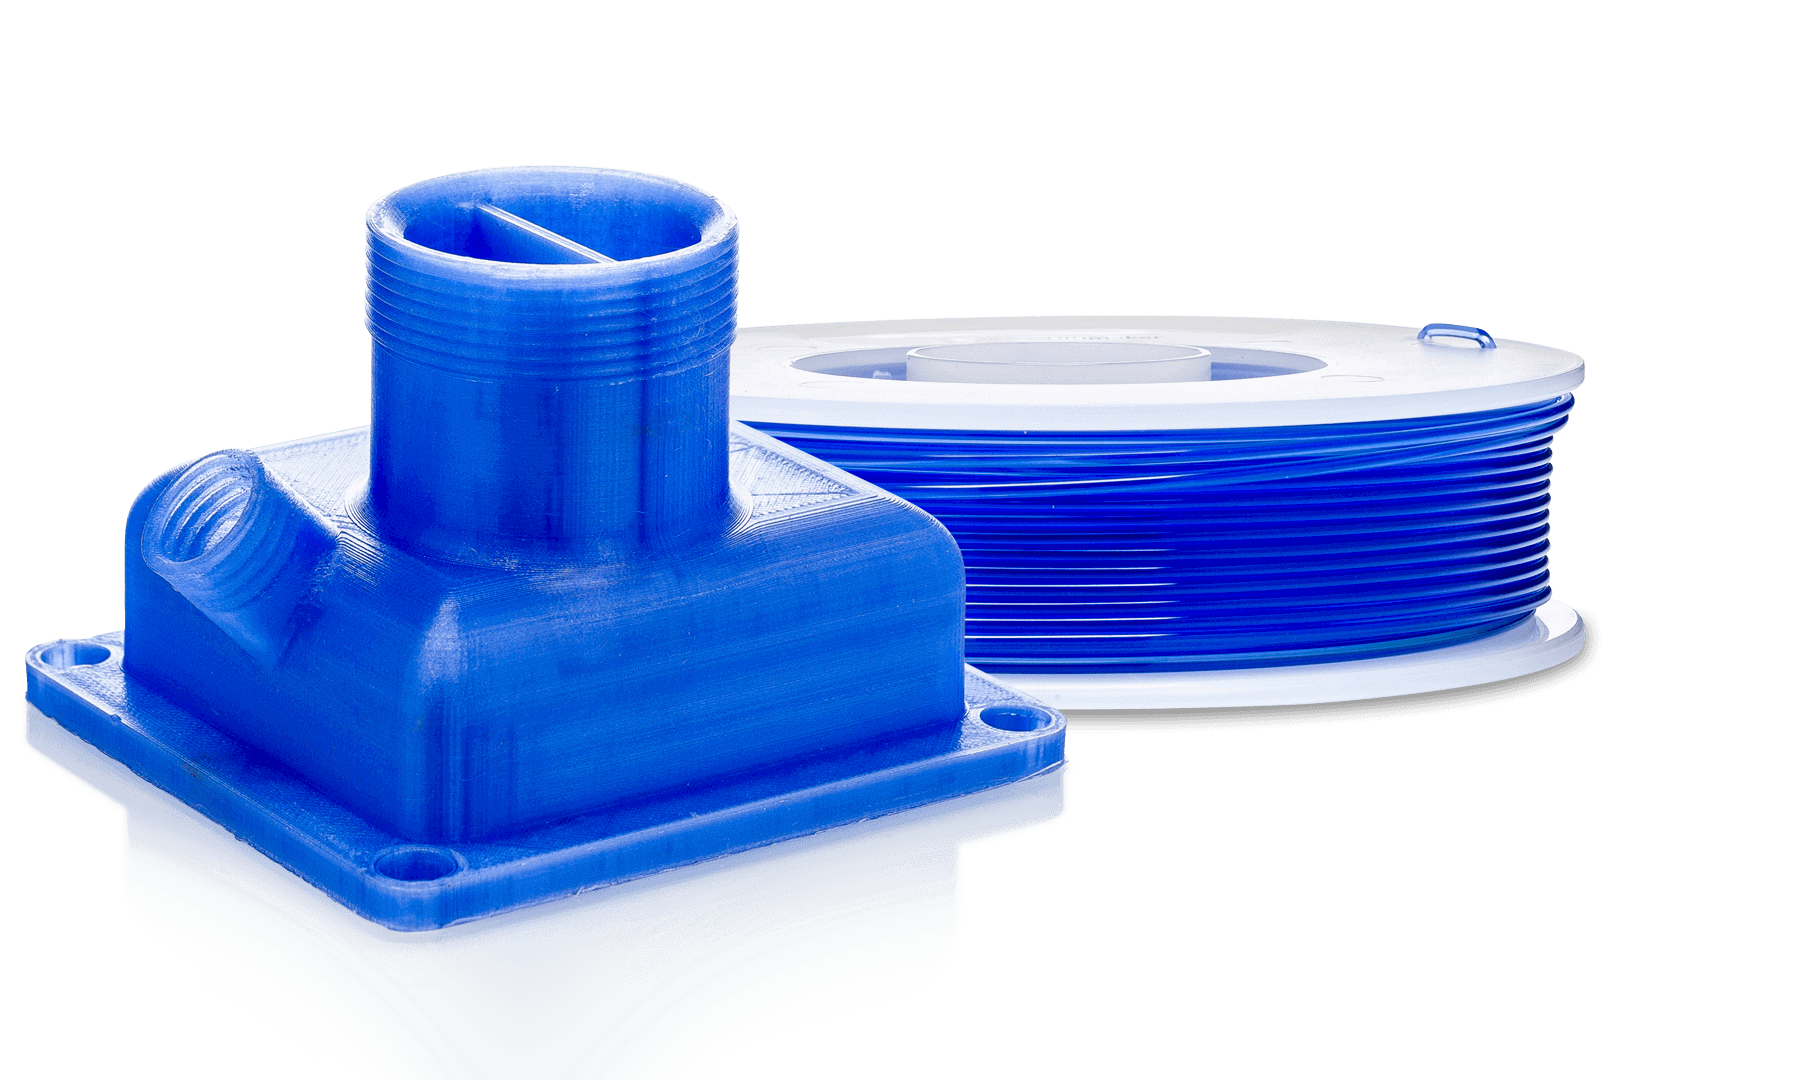 Ultimaker PETG Light Blue filament prints